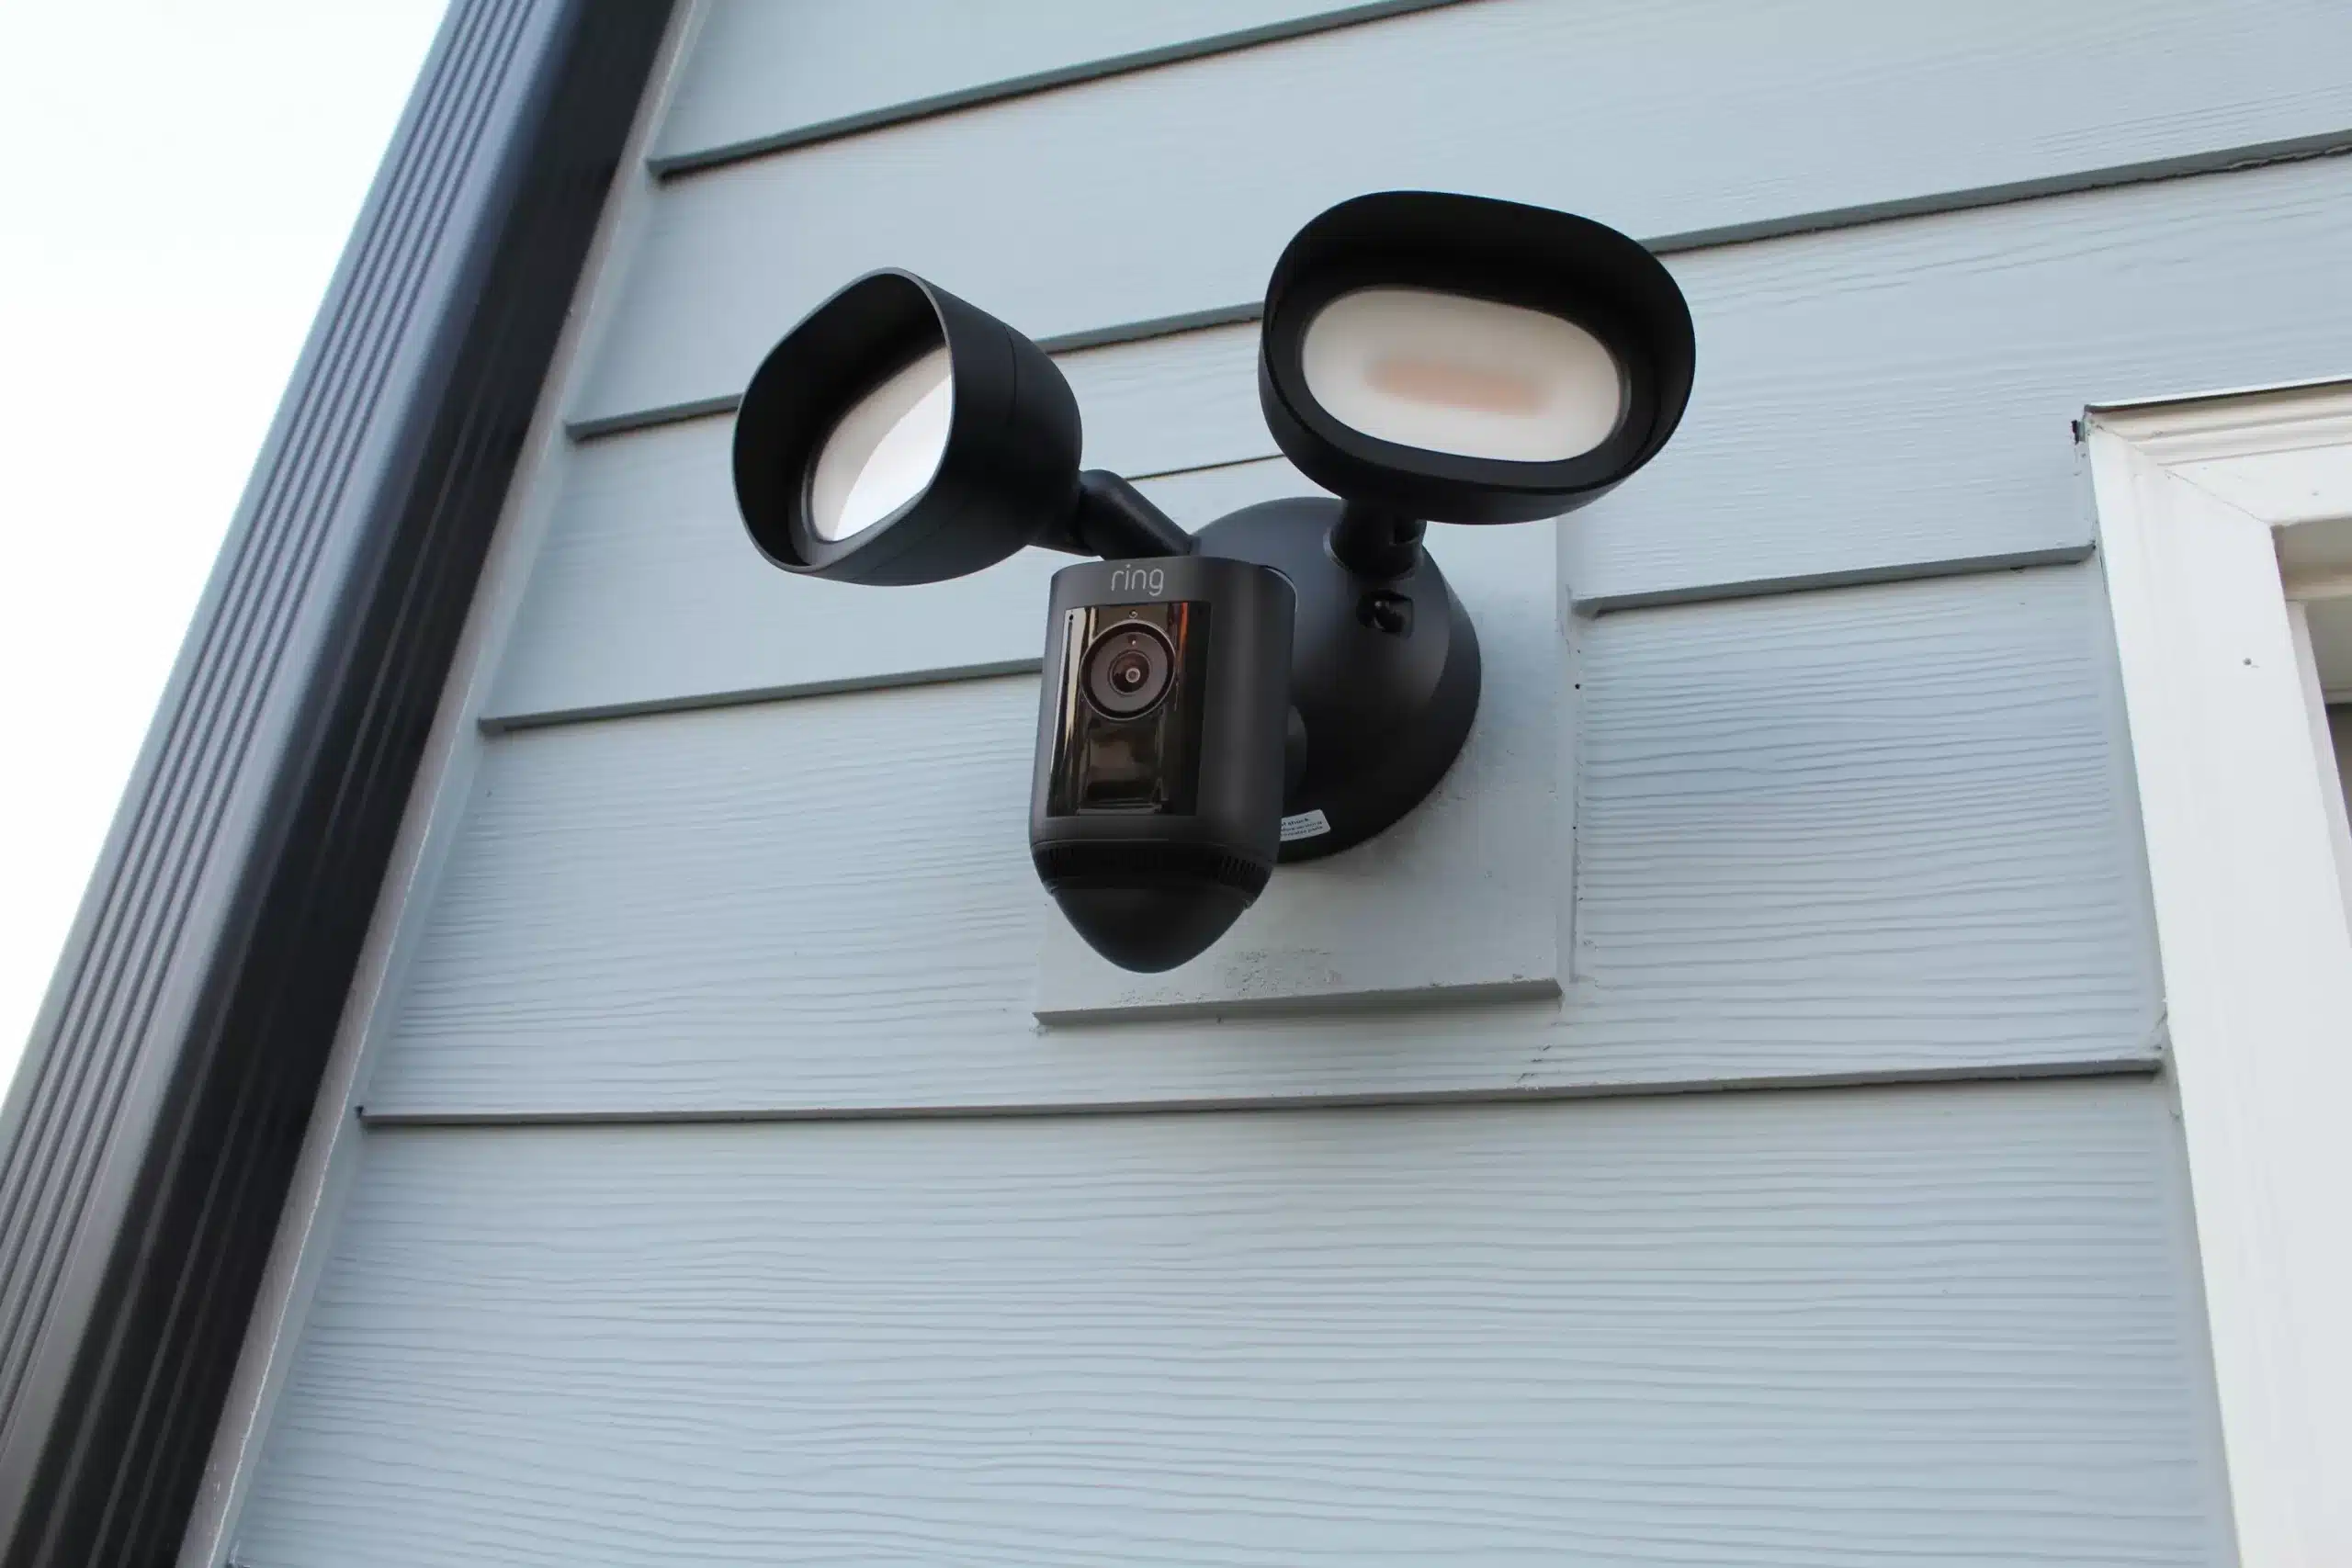 Floodlight Cam Wired Plus